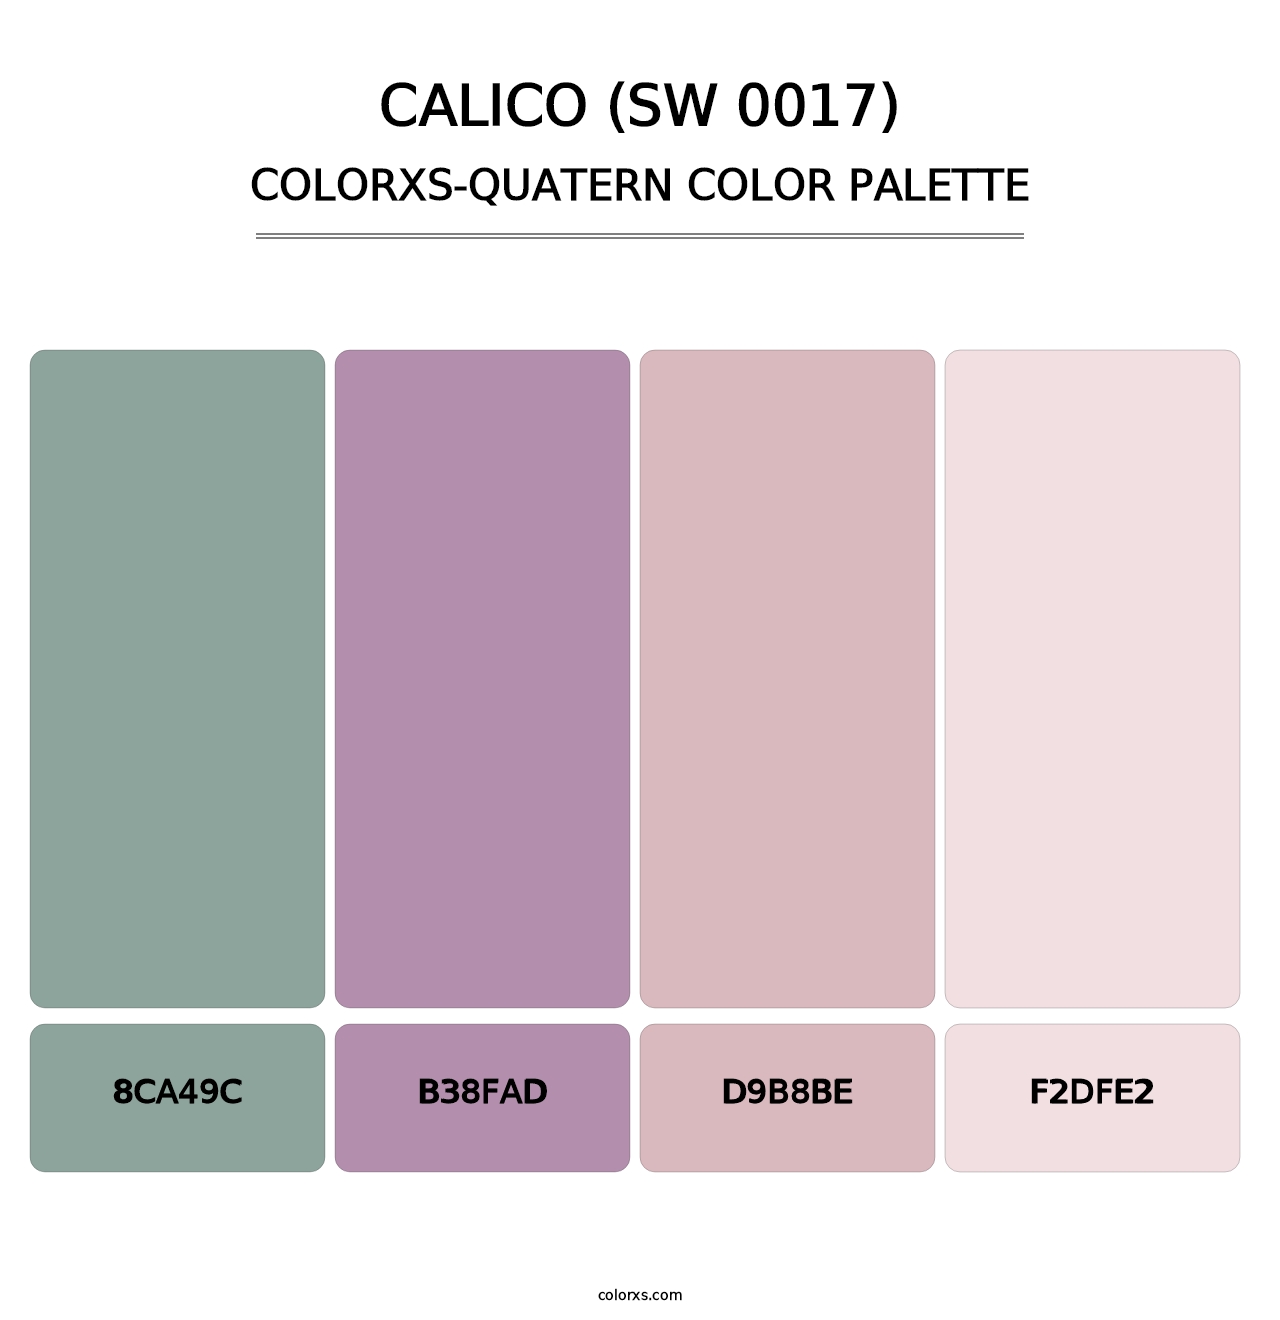 Calico (SW 0017) - Colorxs Quatern Palette